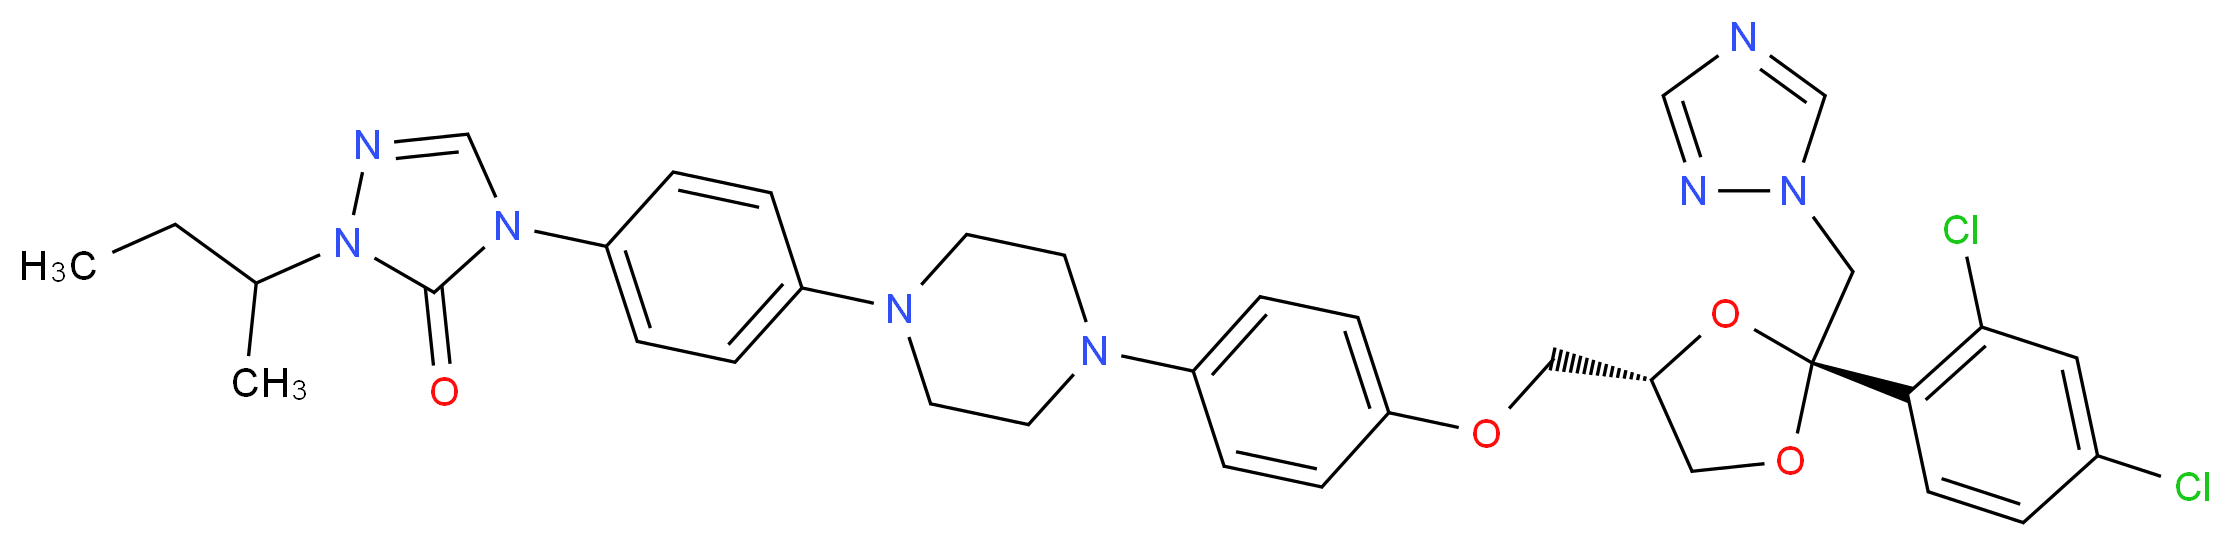 Itraconazole_Molecular_structure_CAS_84625-61-6)